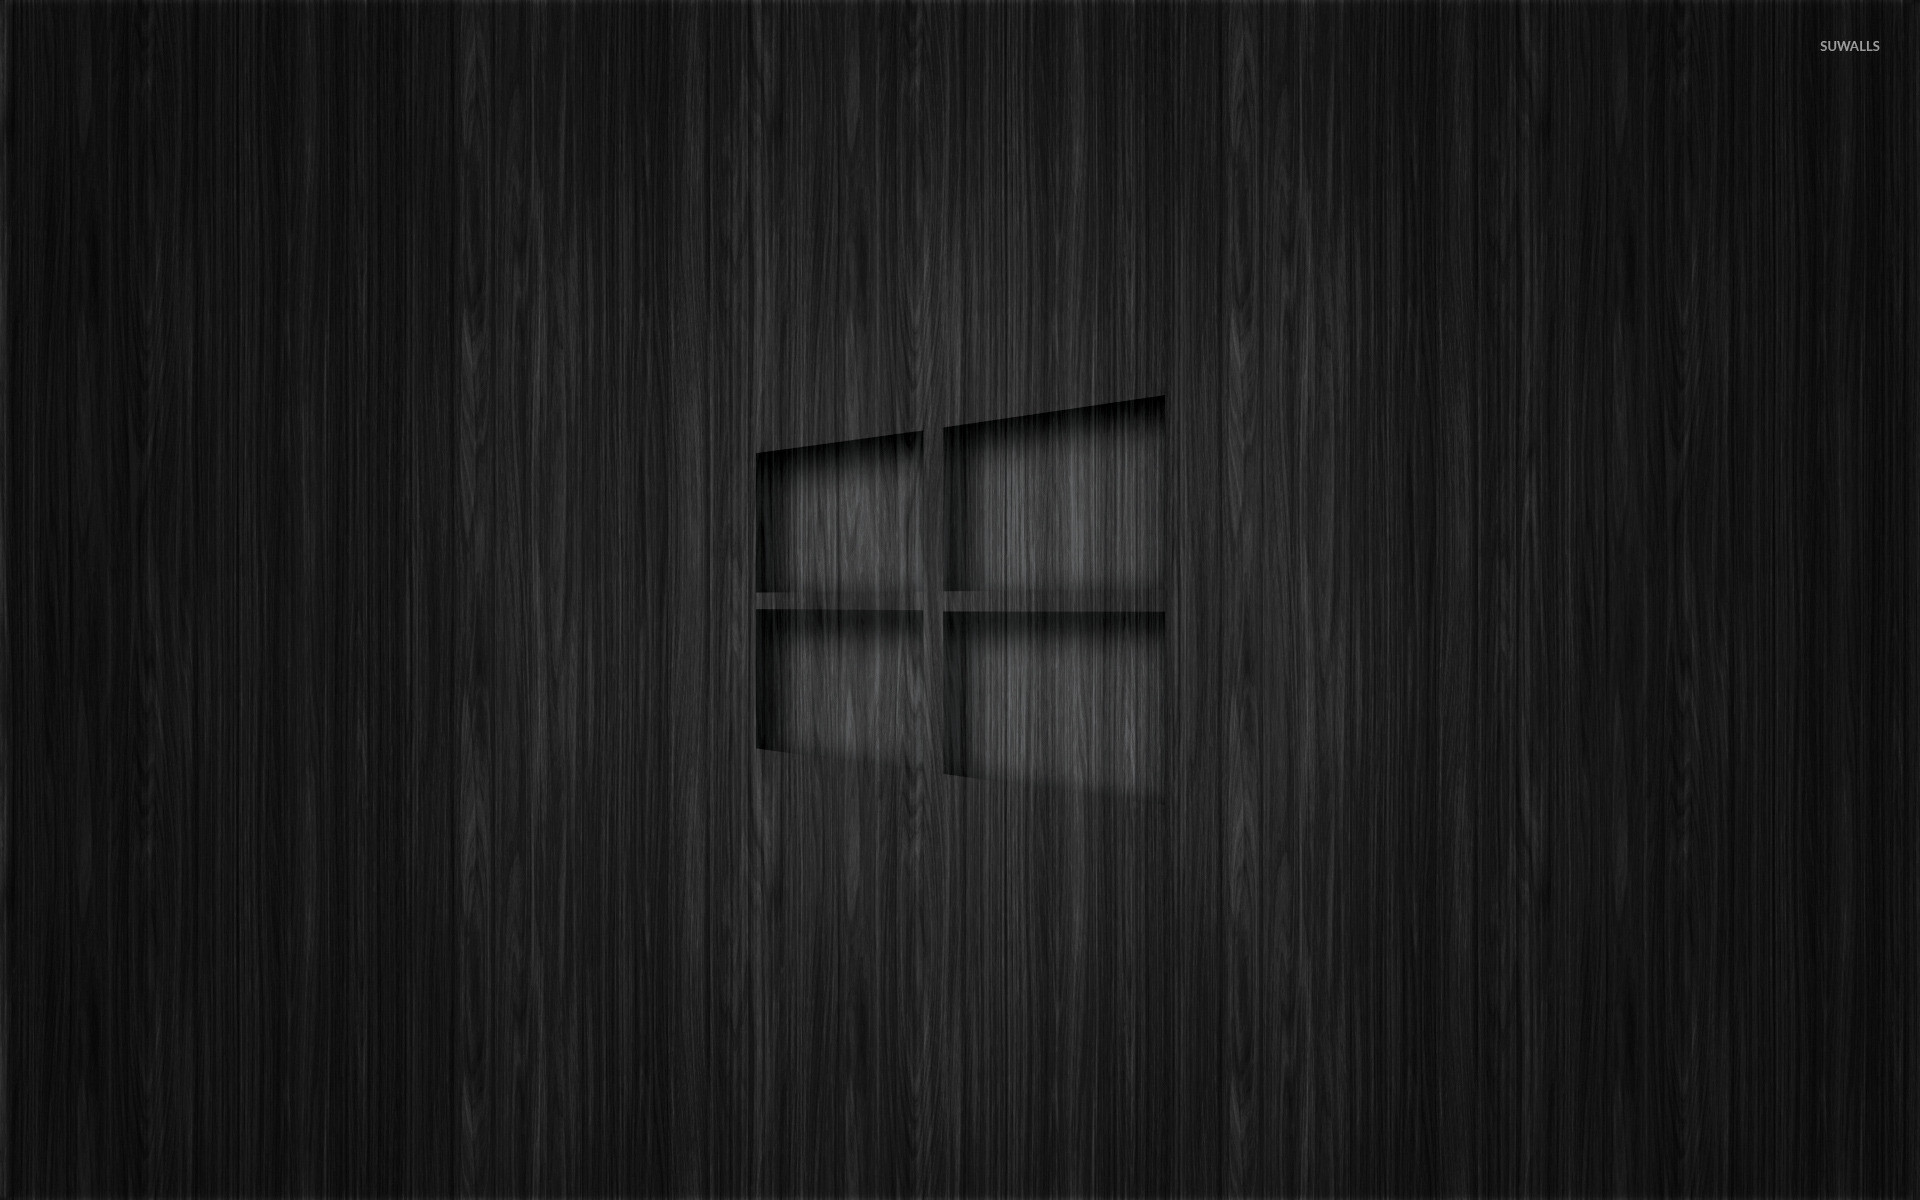 Dark Windows 10 Wallpaper 76 Images